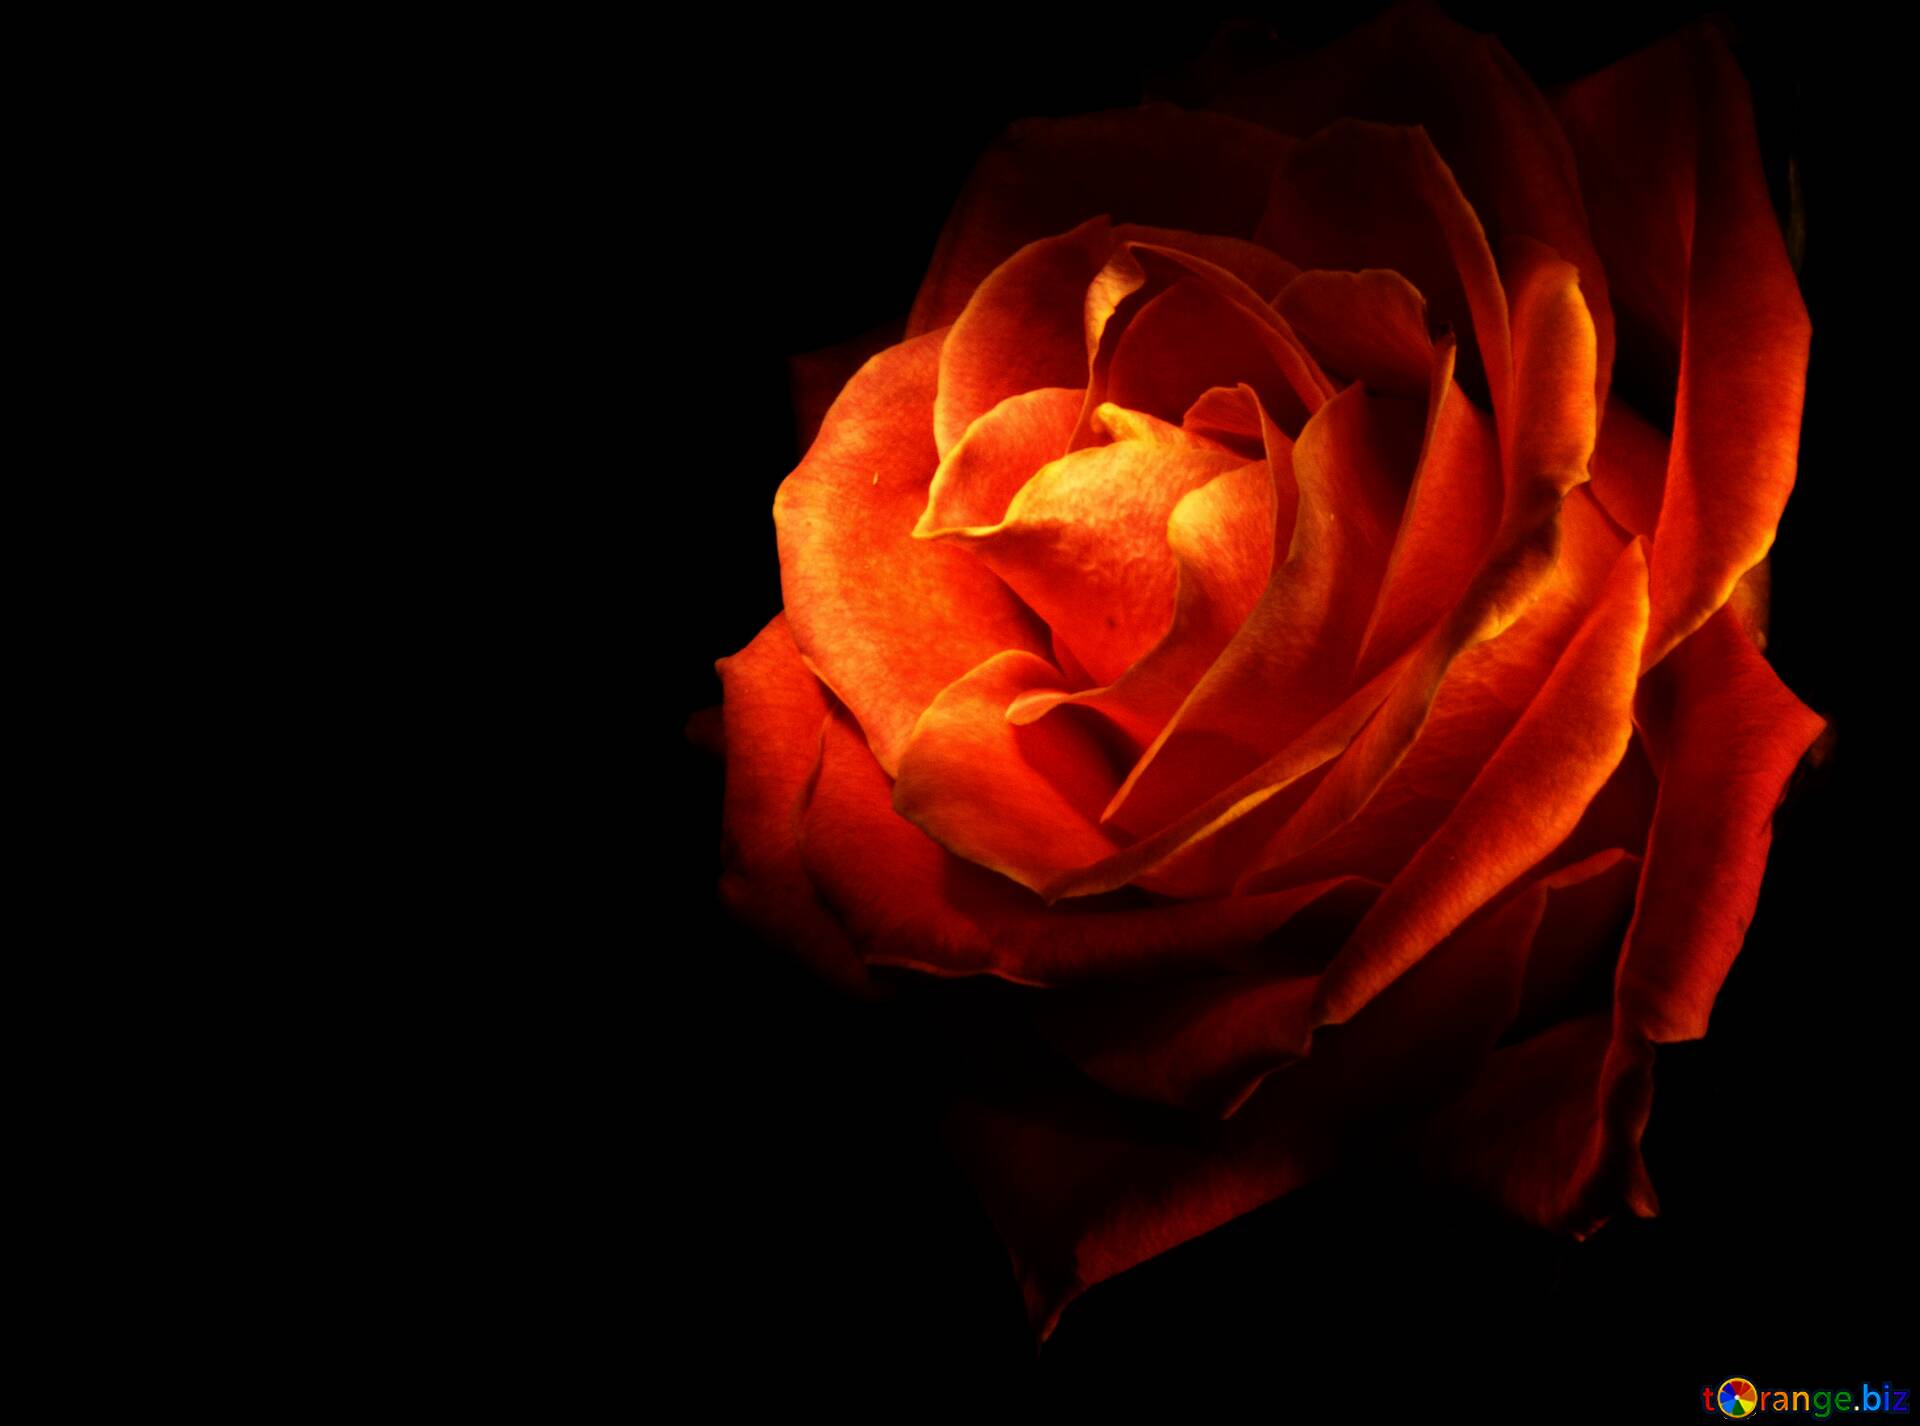 Wallpaper ID: 3601 / rose, flower, flame, fire, 4k free download